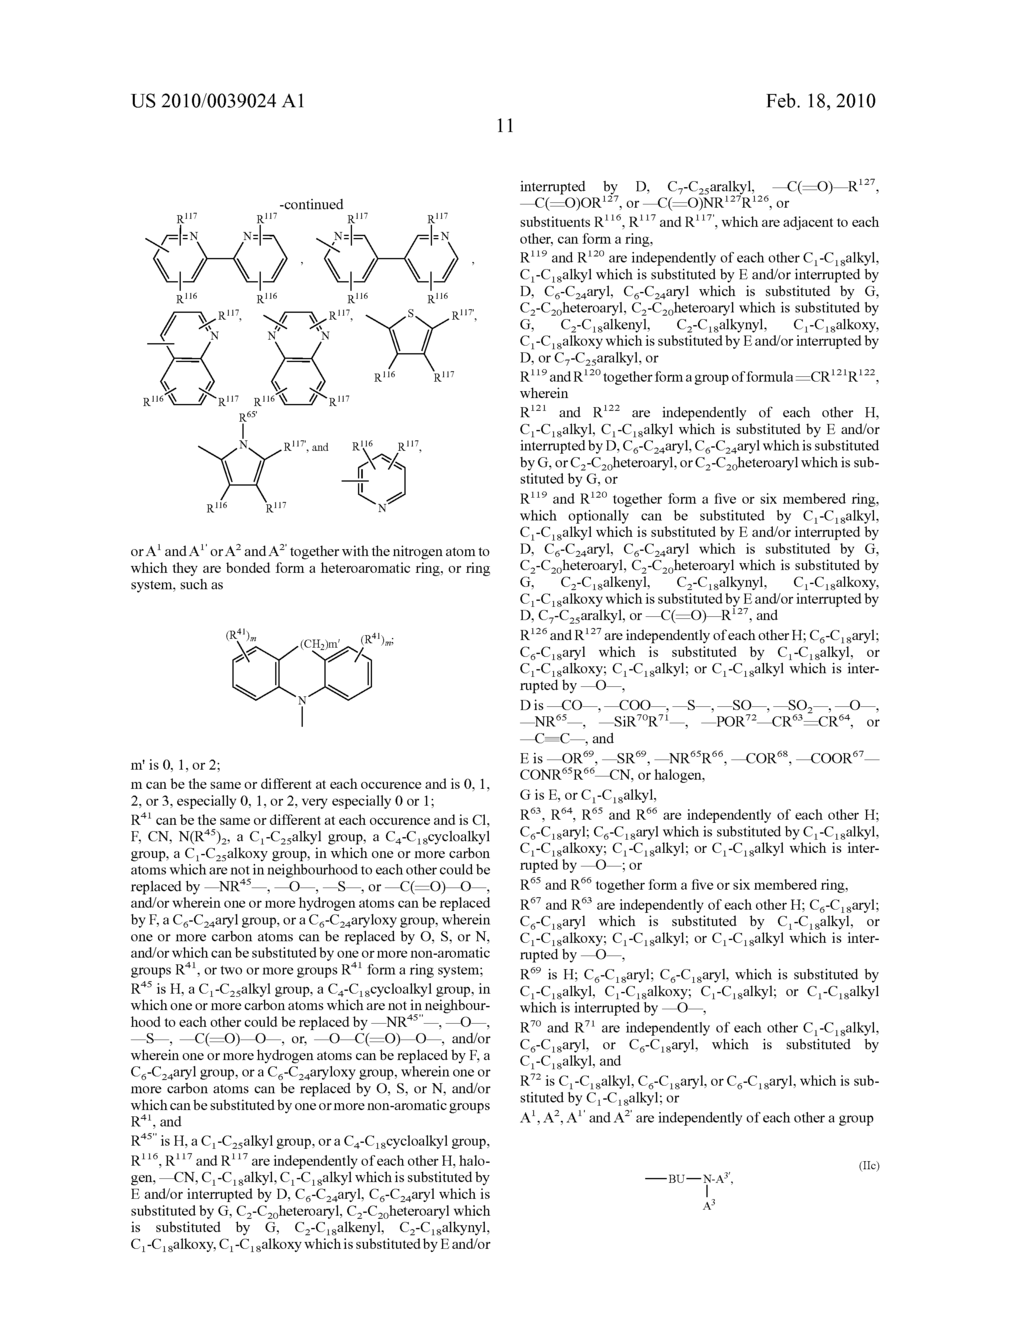 New Heterocyclic bridged biphenyls - diagram, schematic, and image 13